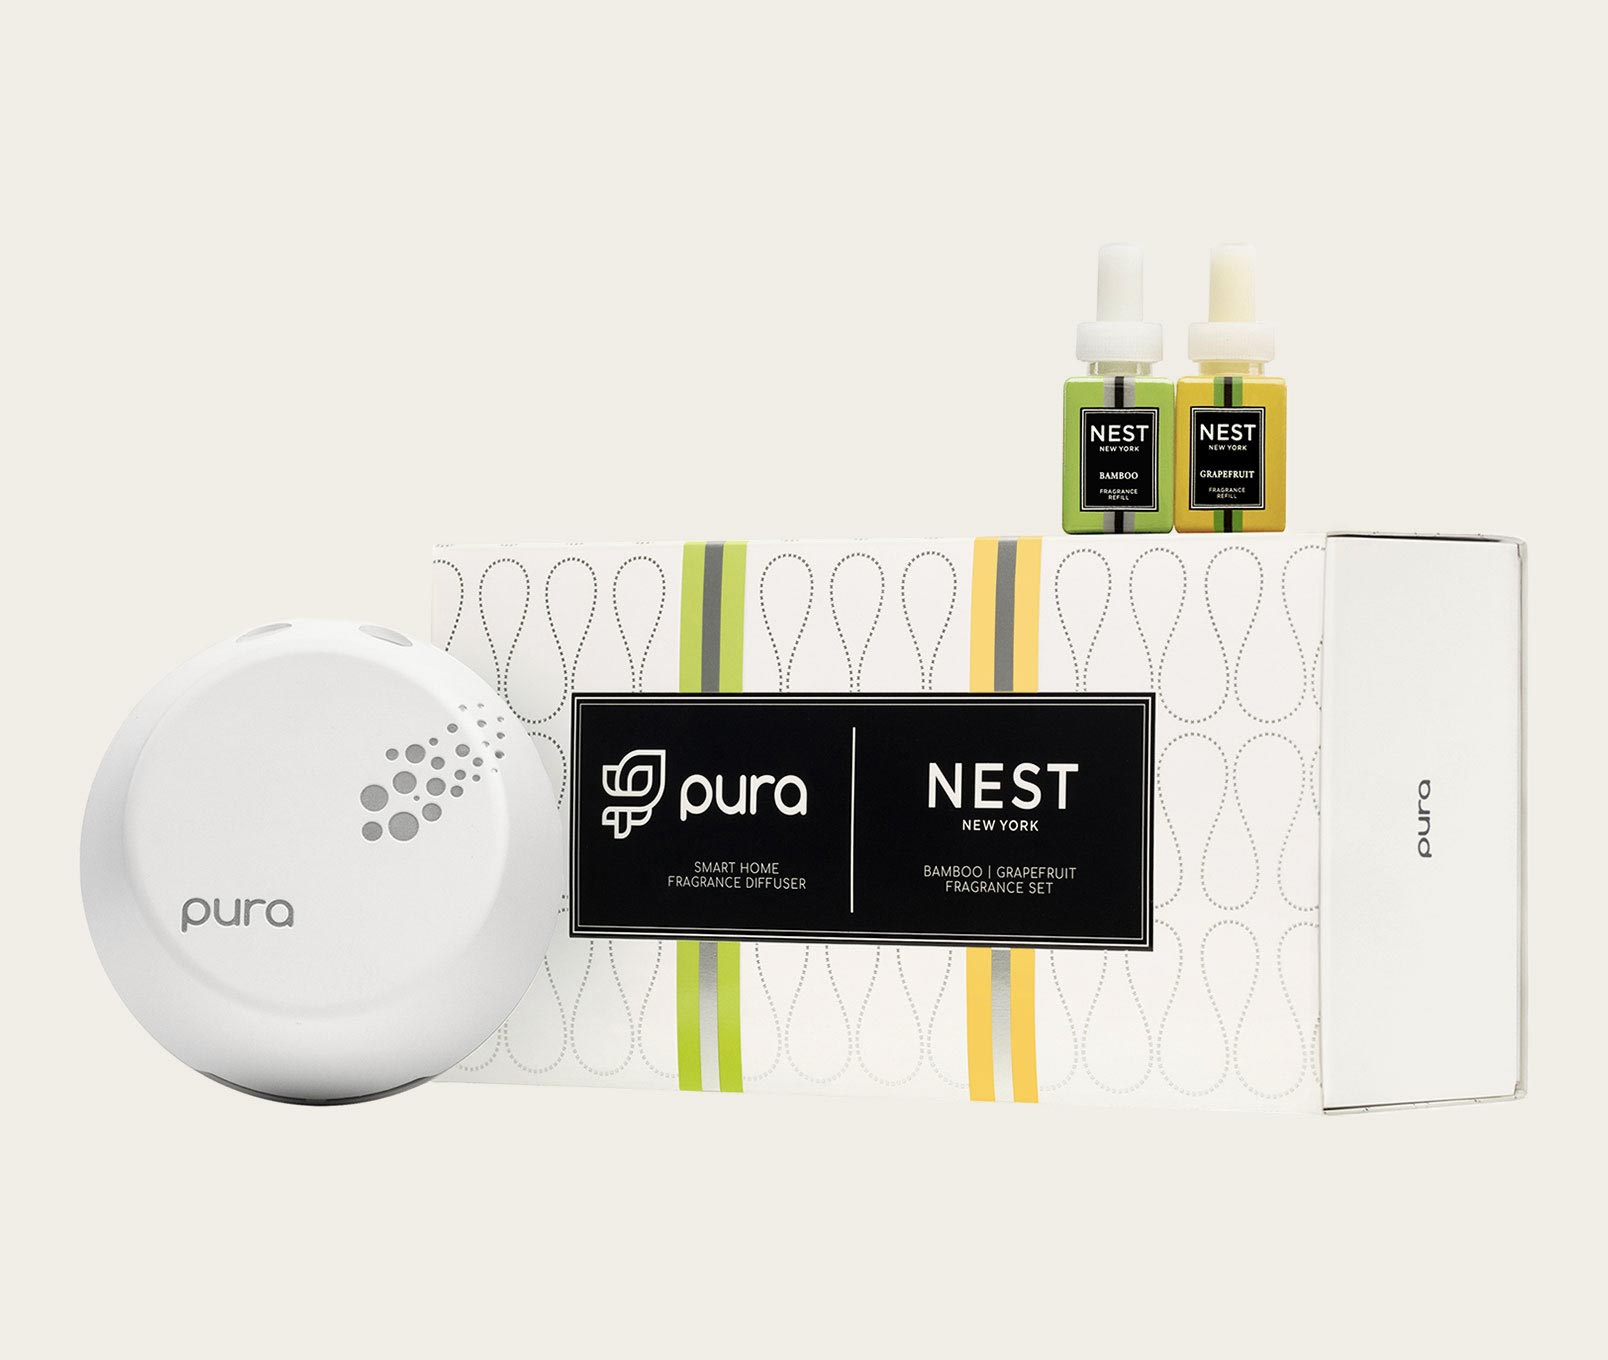 Pura diffuser: A smart essential oil diffuser that smells great